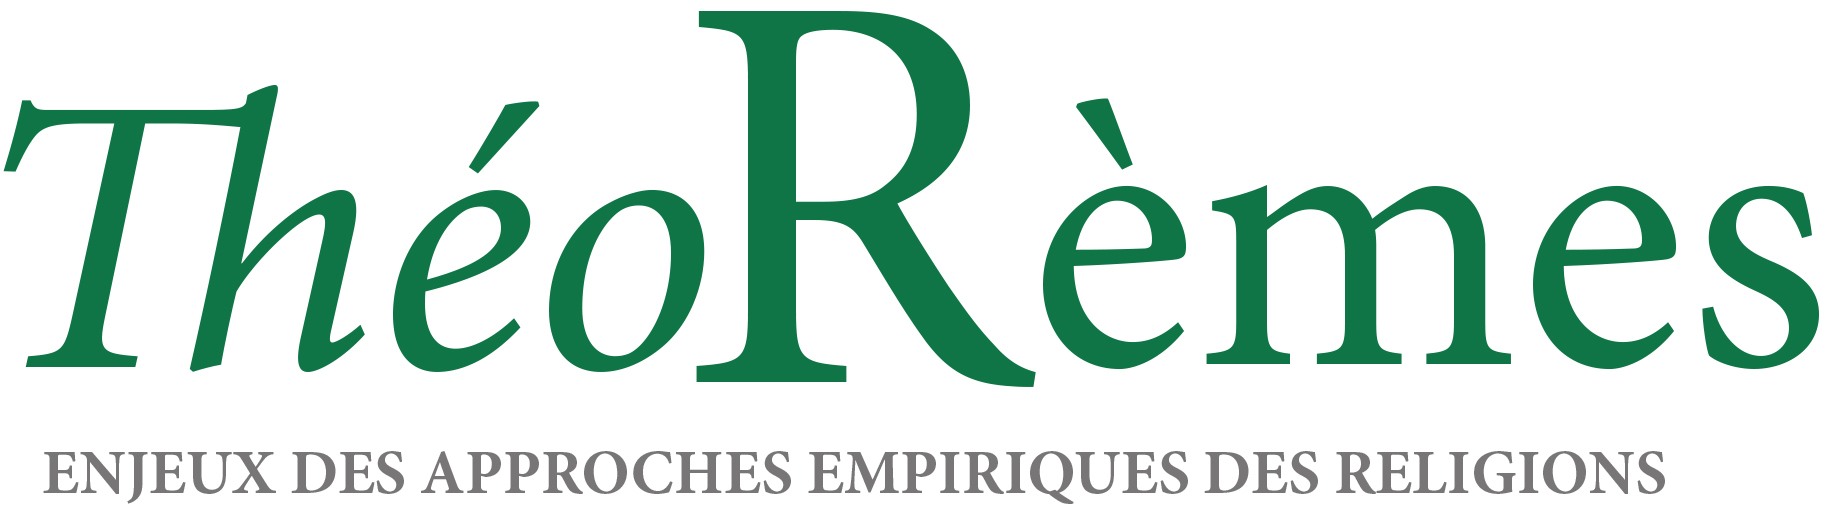 logo-Theoremes.jpg